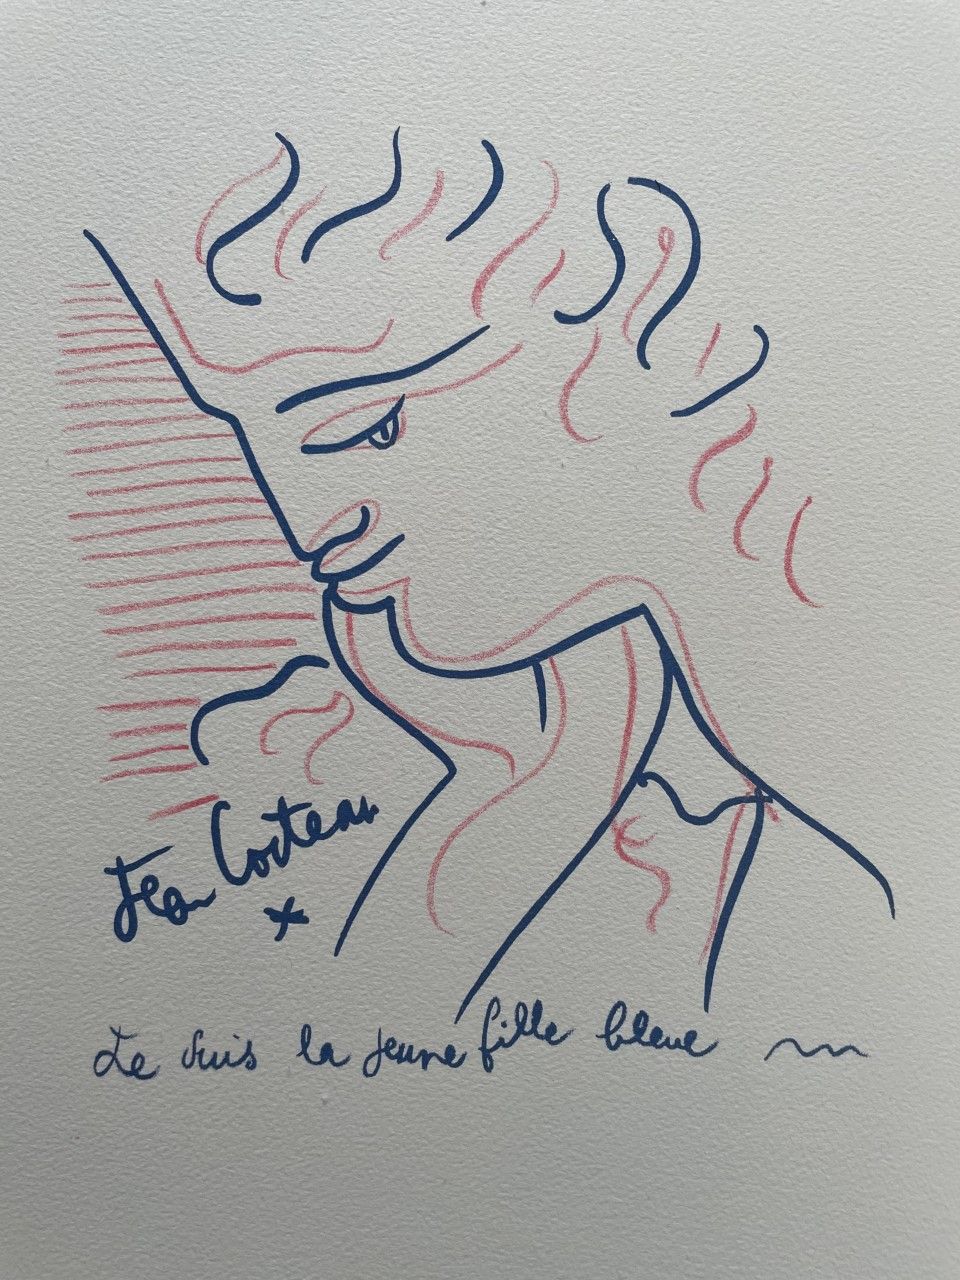 COCTEAU Jean (1889 - 1963) Lithographie "LA JEUNE FILLE "Signiert und datiert im&hellip;